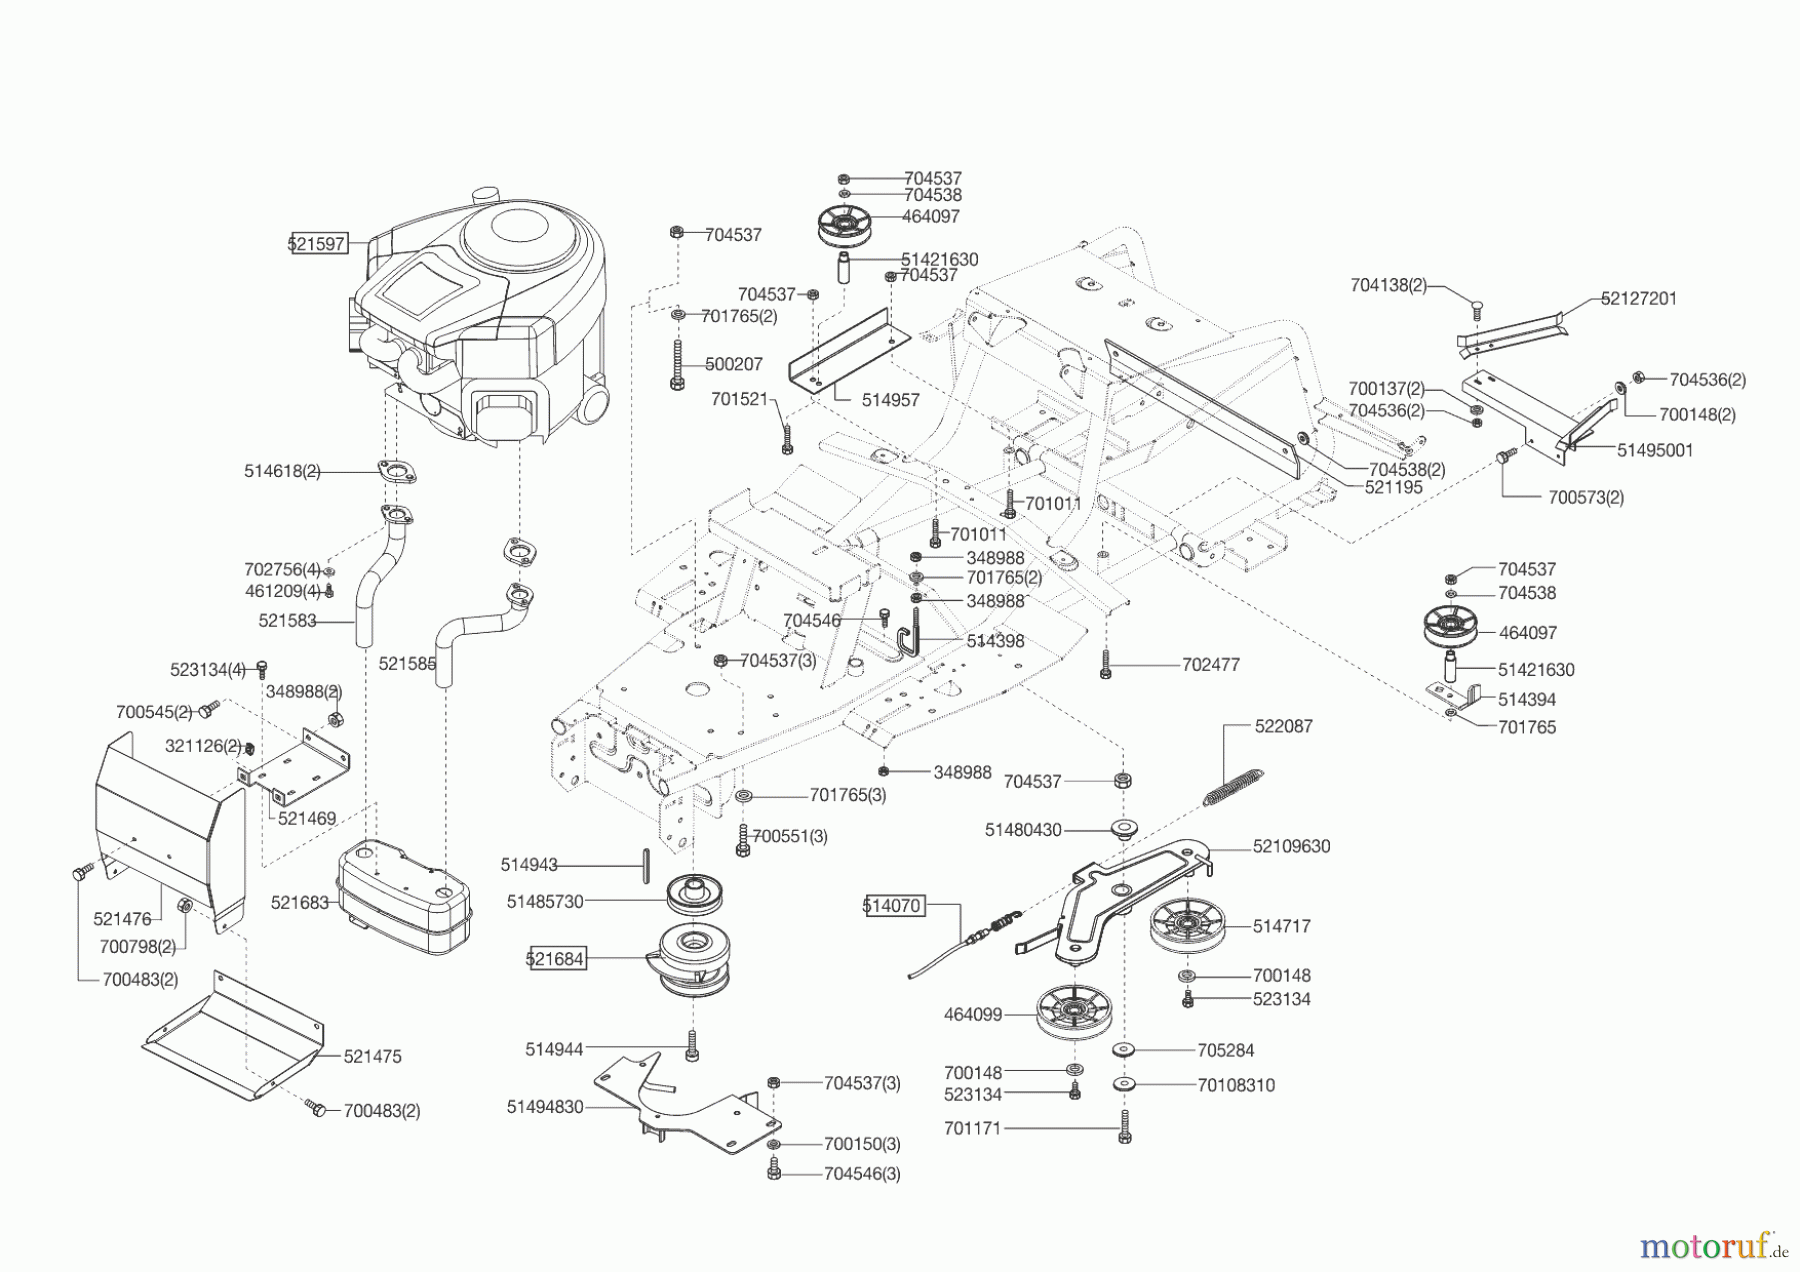  AL-KO Gartentechnik Rasentraktor T 20-102 HD Gulistan  02/2015 - 03/2015 Seite 4